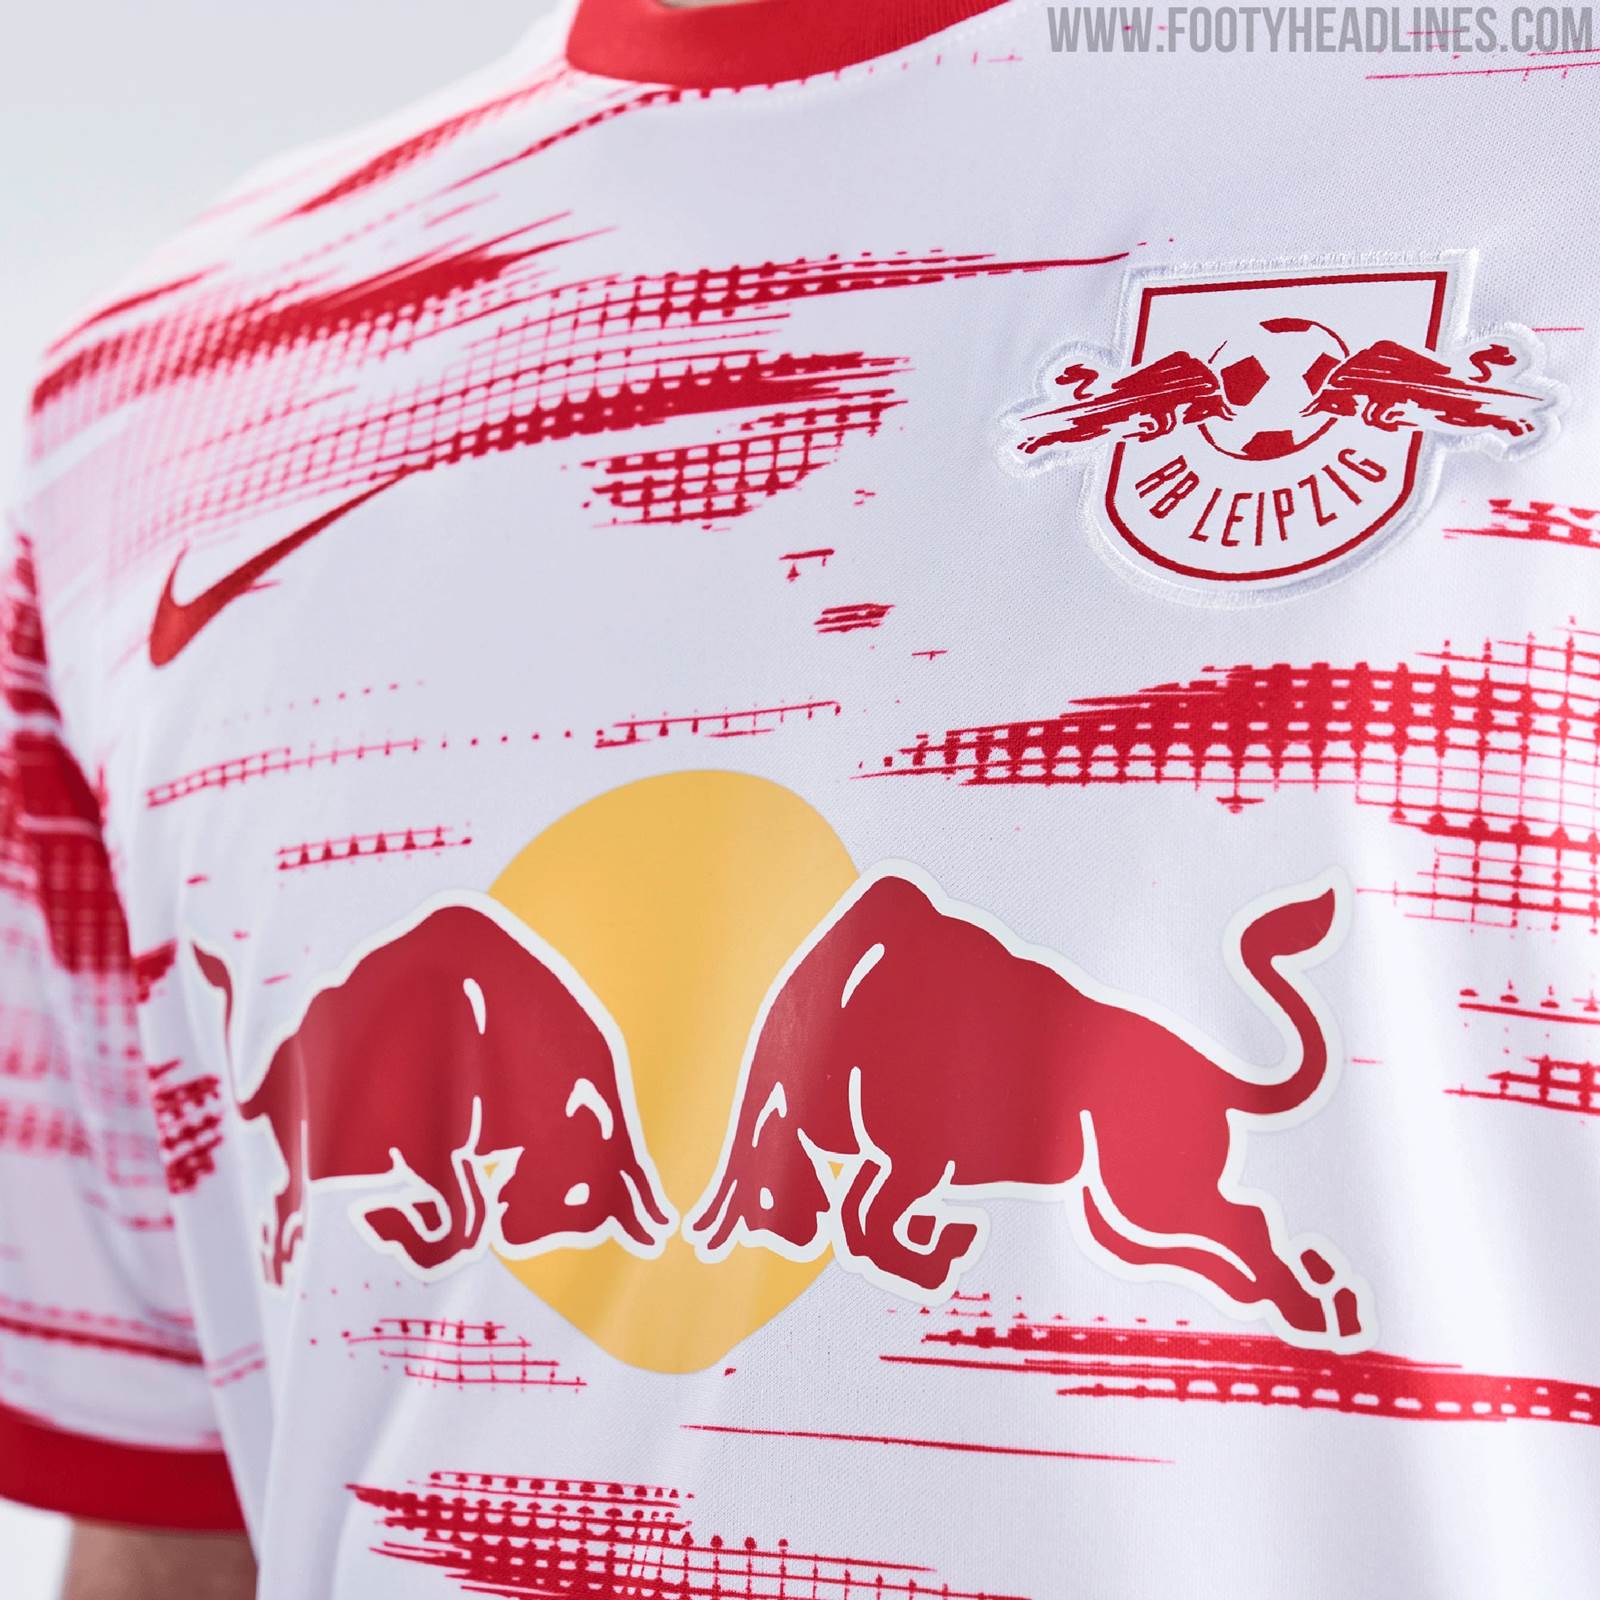 RB Leipzig 2021-22 Nike Third Kit - Football Shirt Culture - Latest  Football Kit News and More